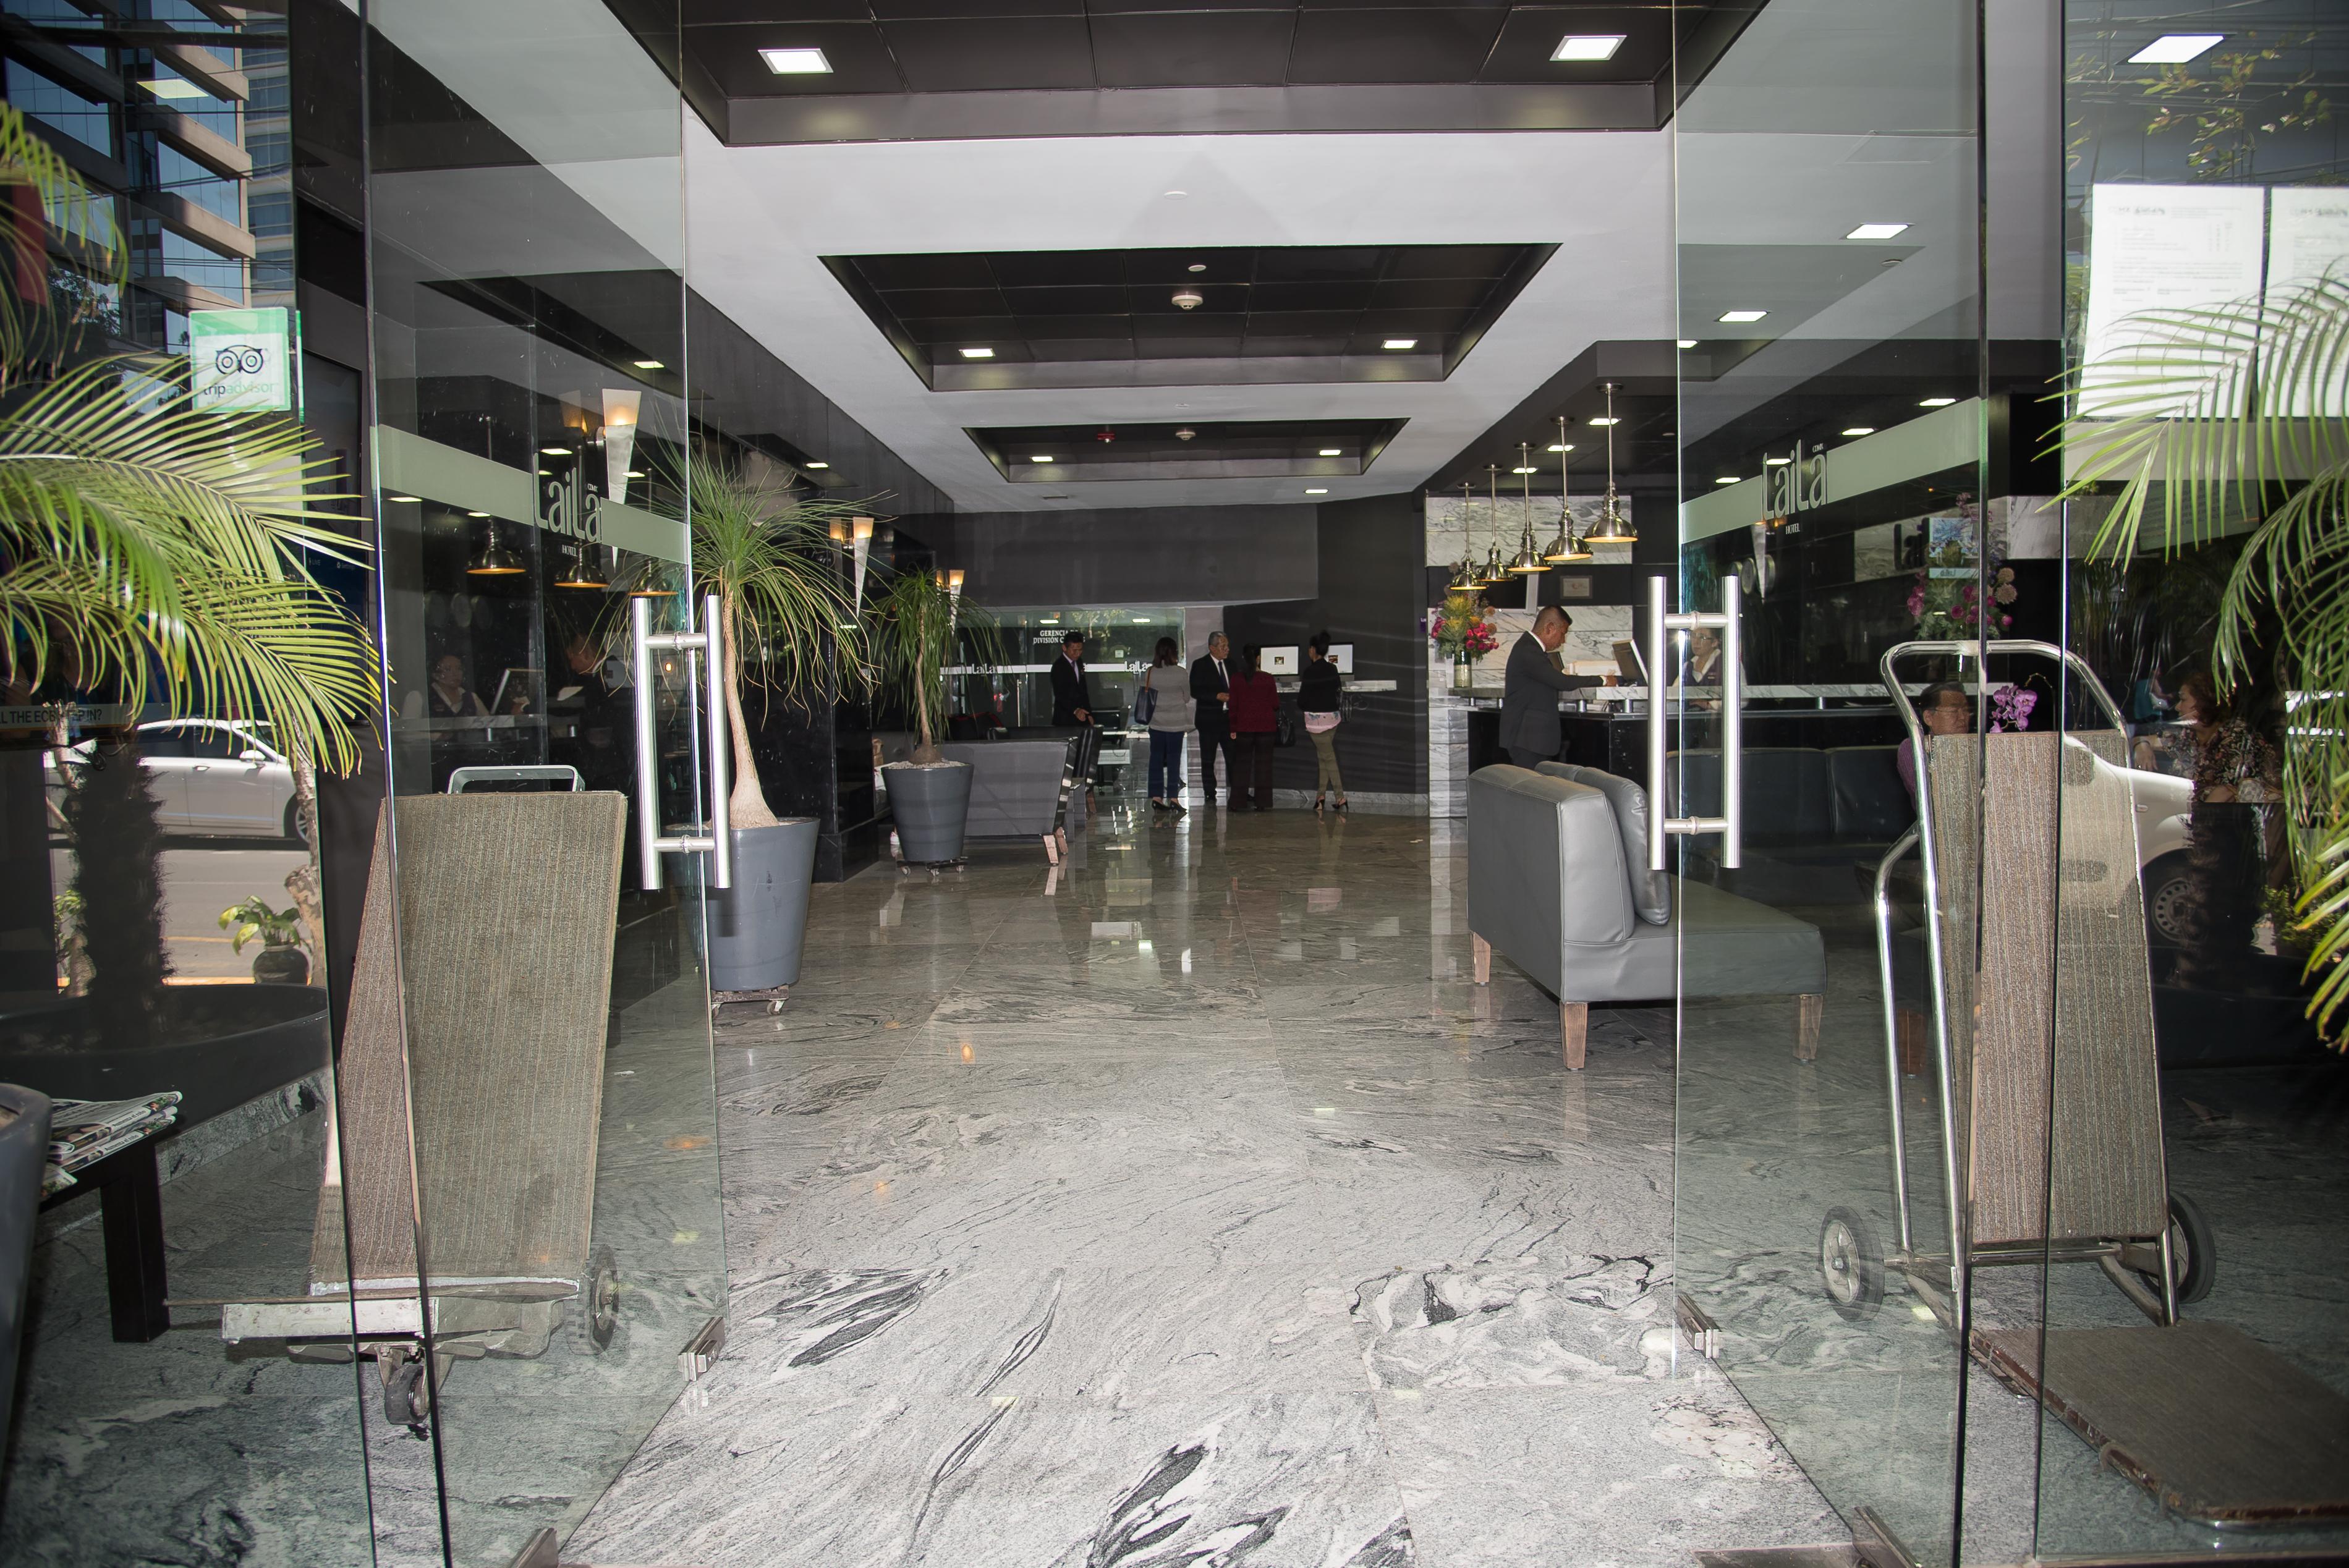 Laila Hotel Cdmx Reforma Мехико Экстерьер фото